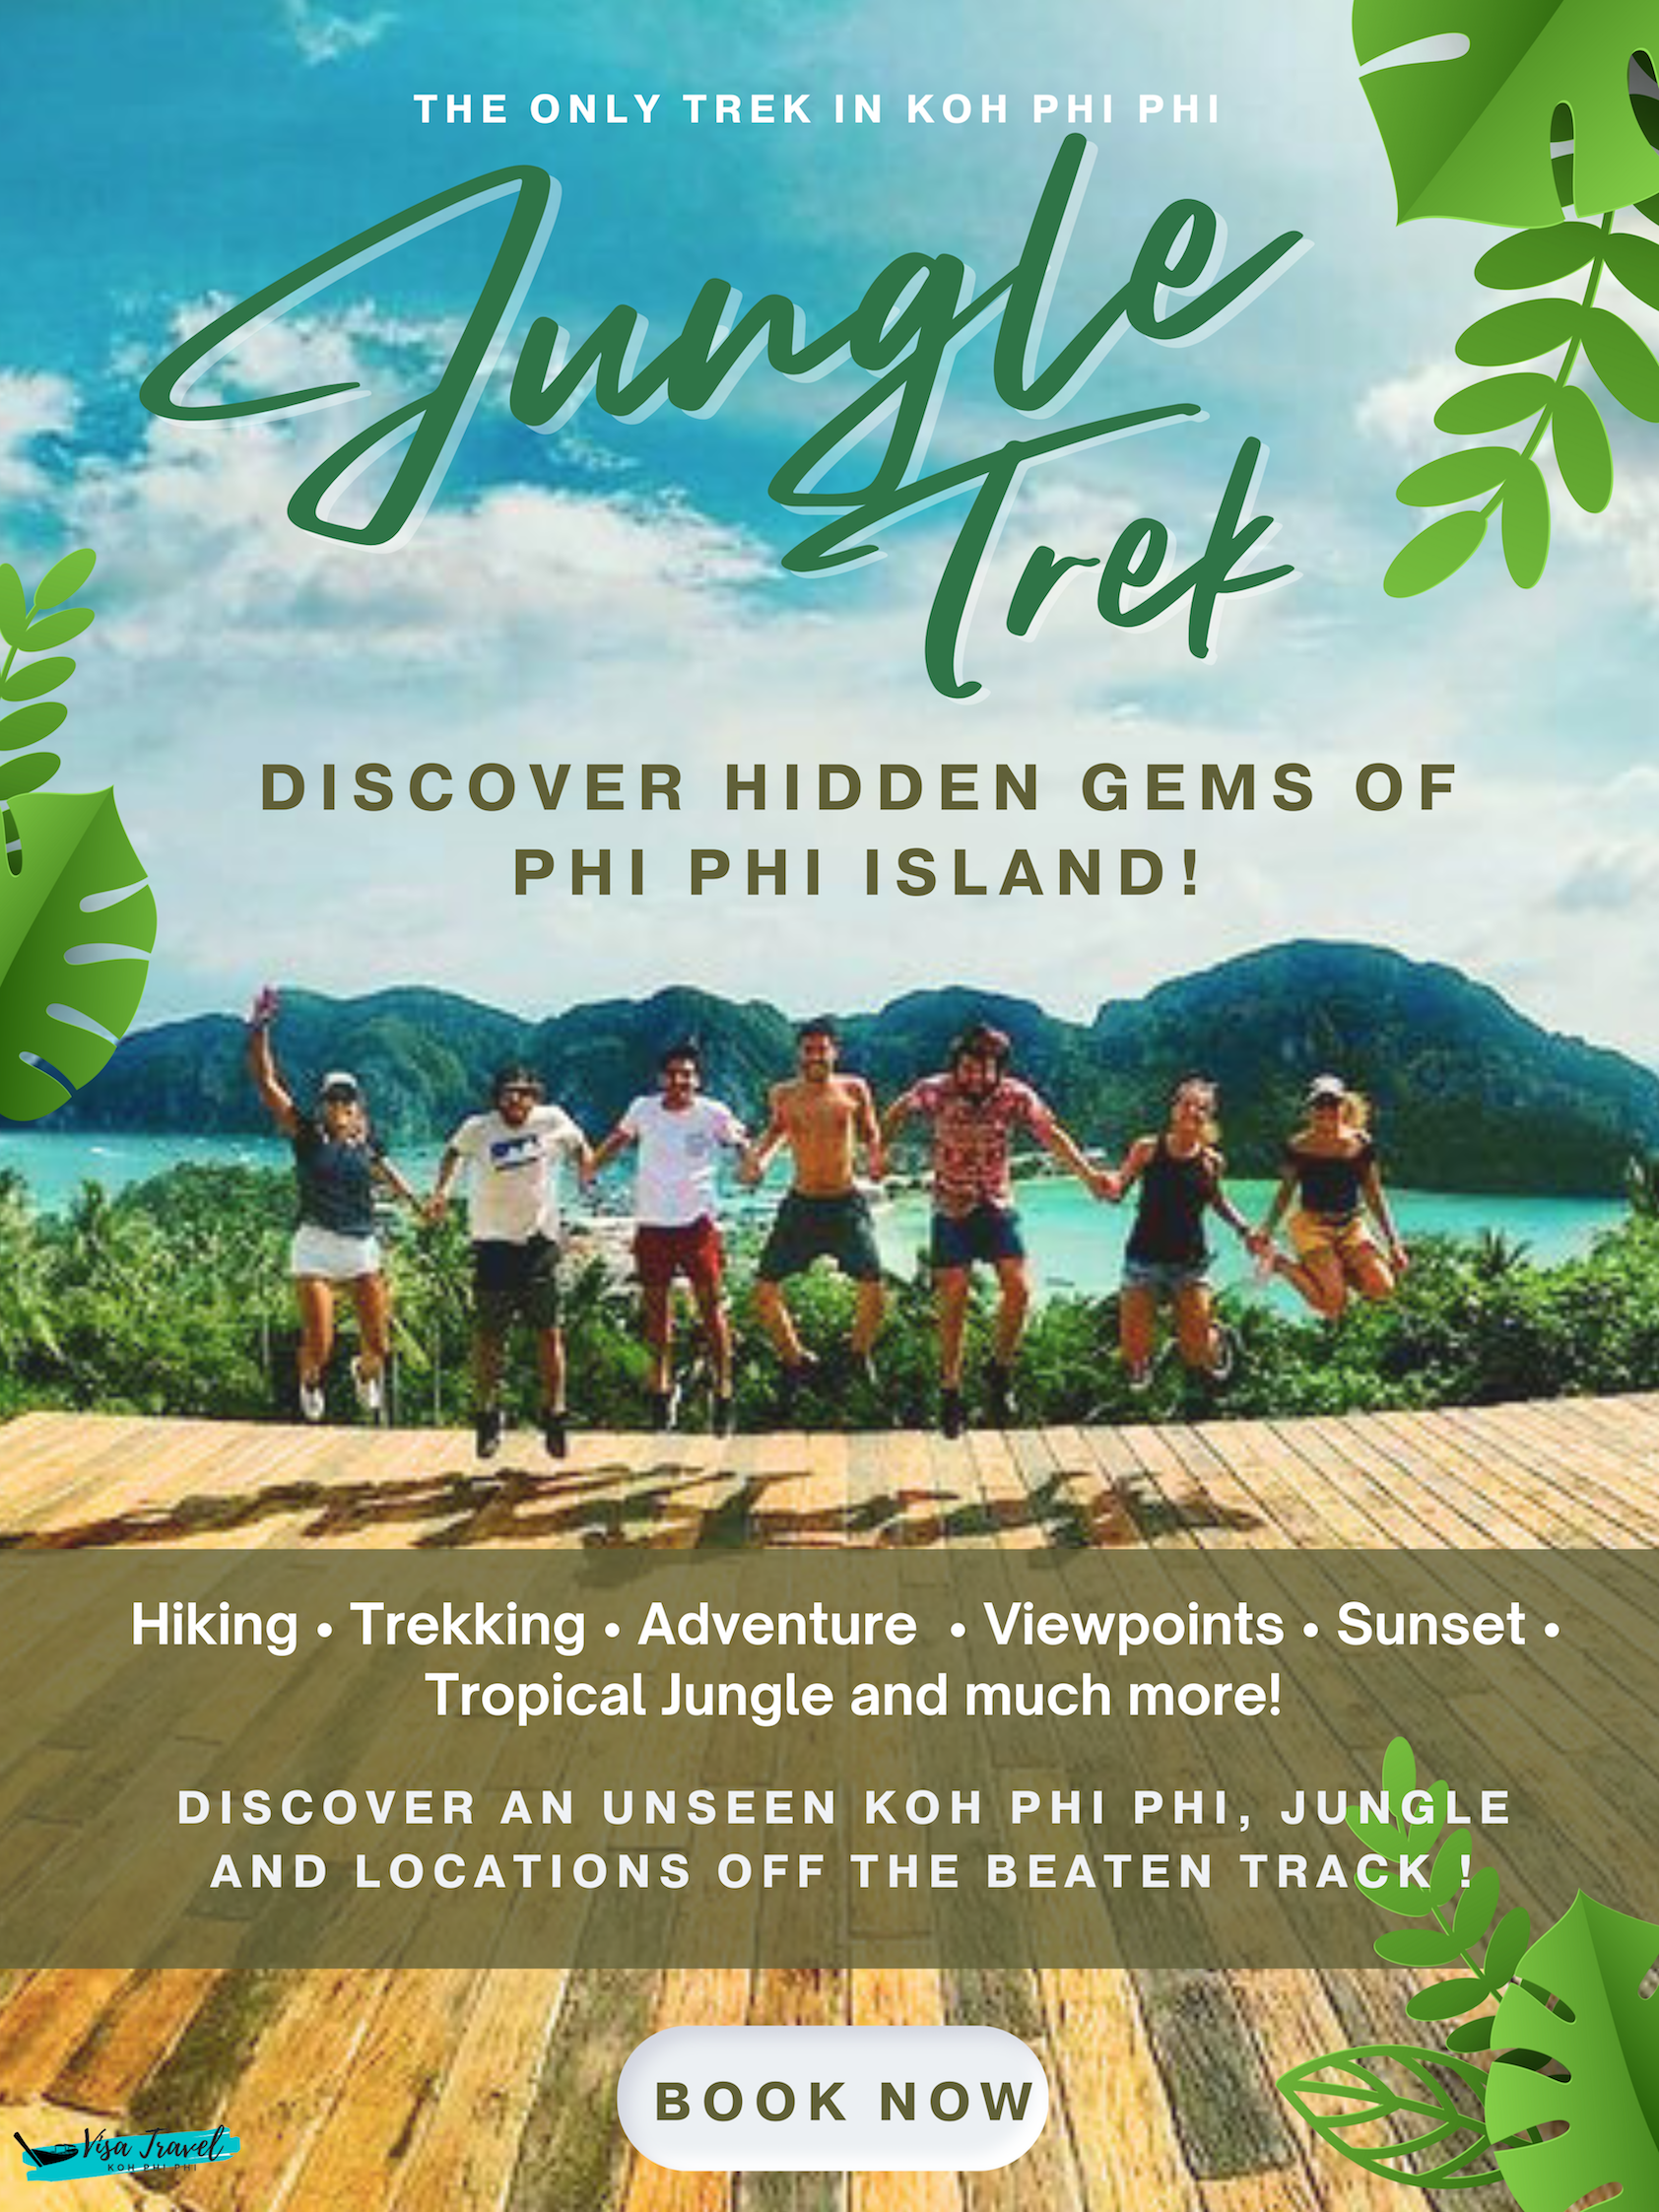 Jungle-trek-koh-phiphi-island